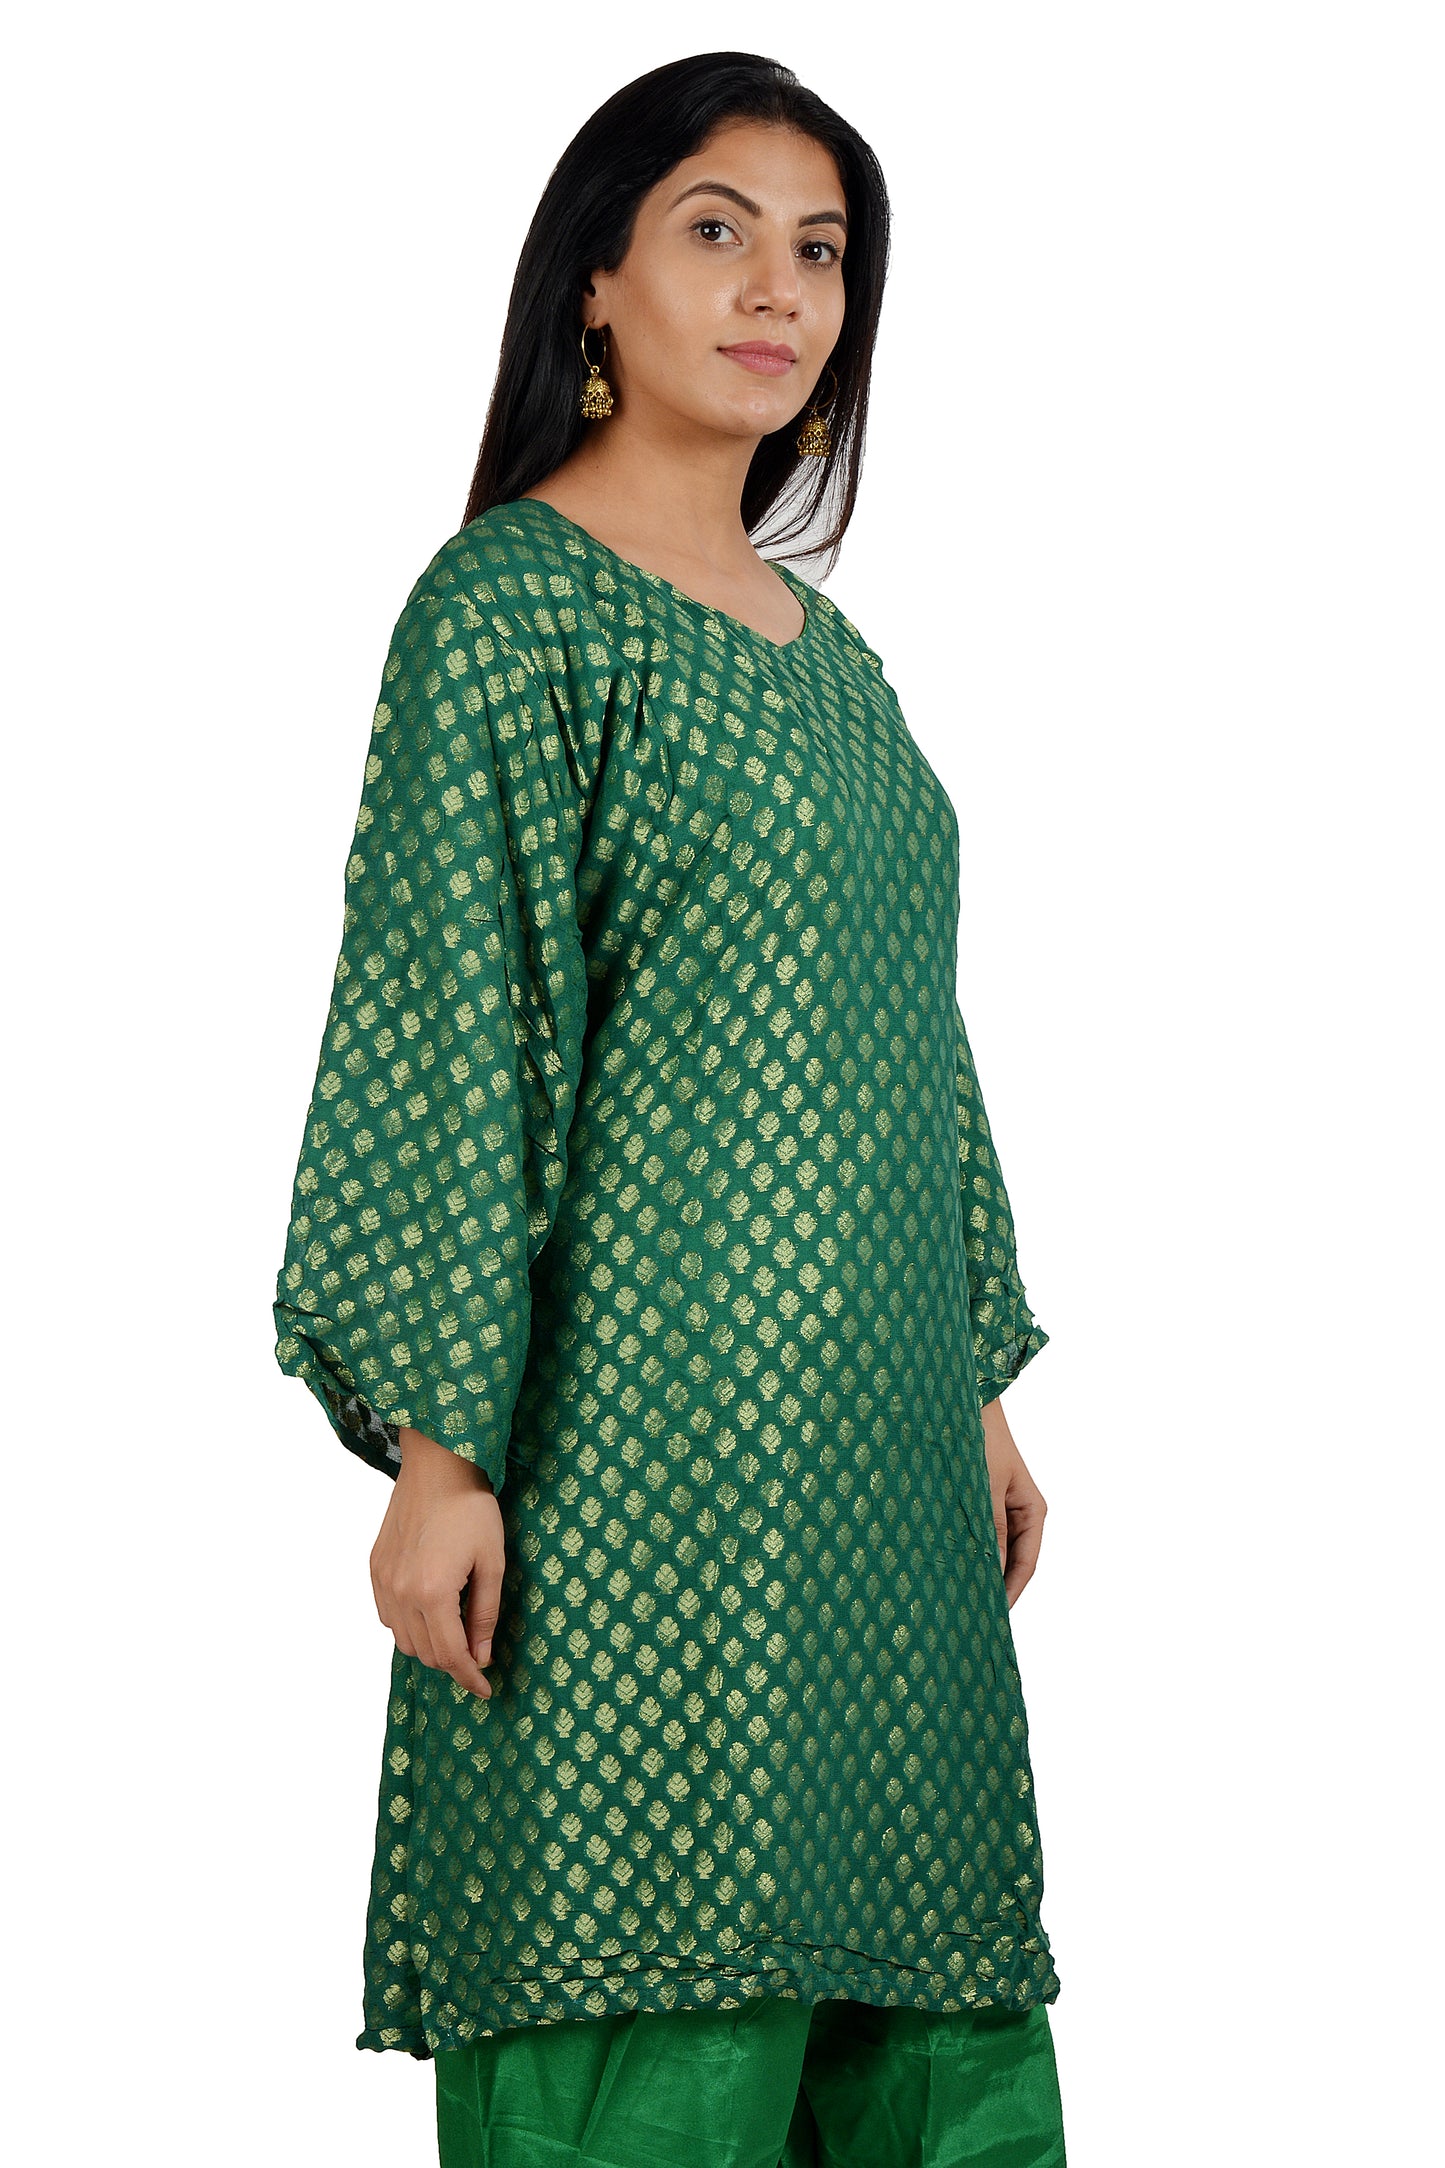 Green   Salwar kameez Dress Plus Size 54